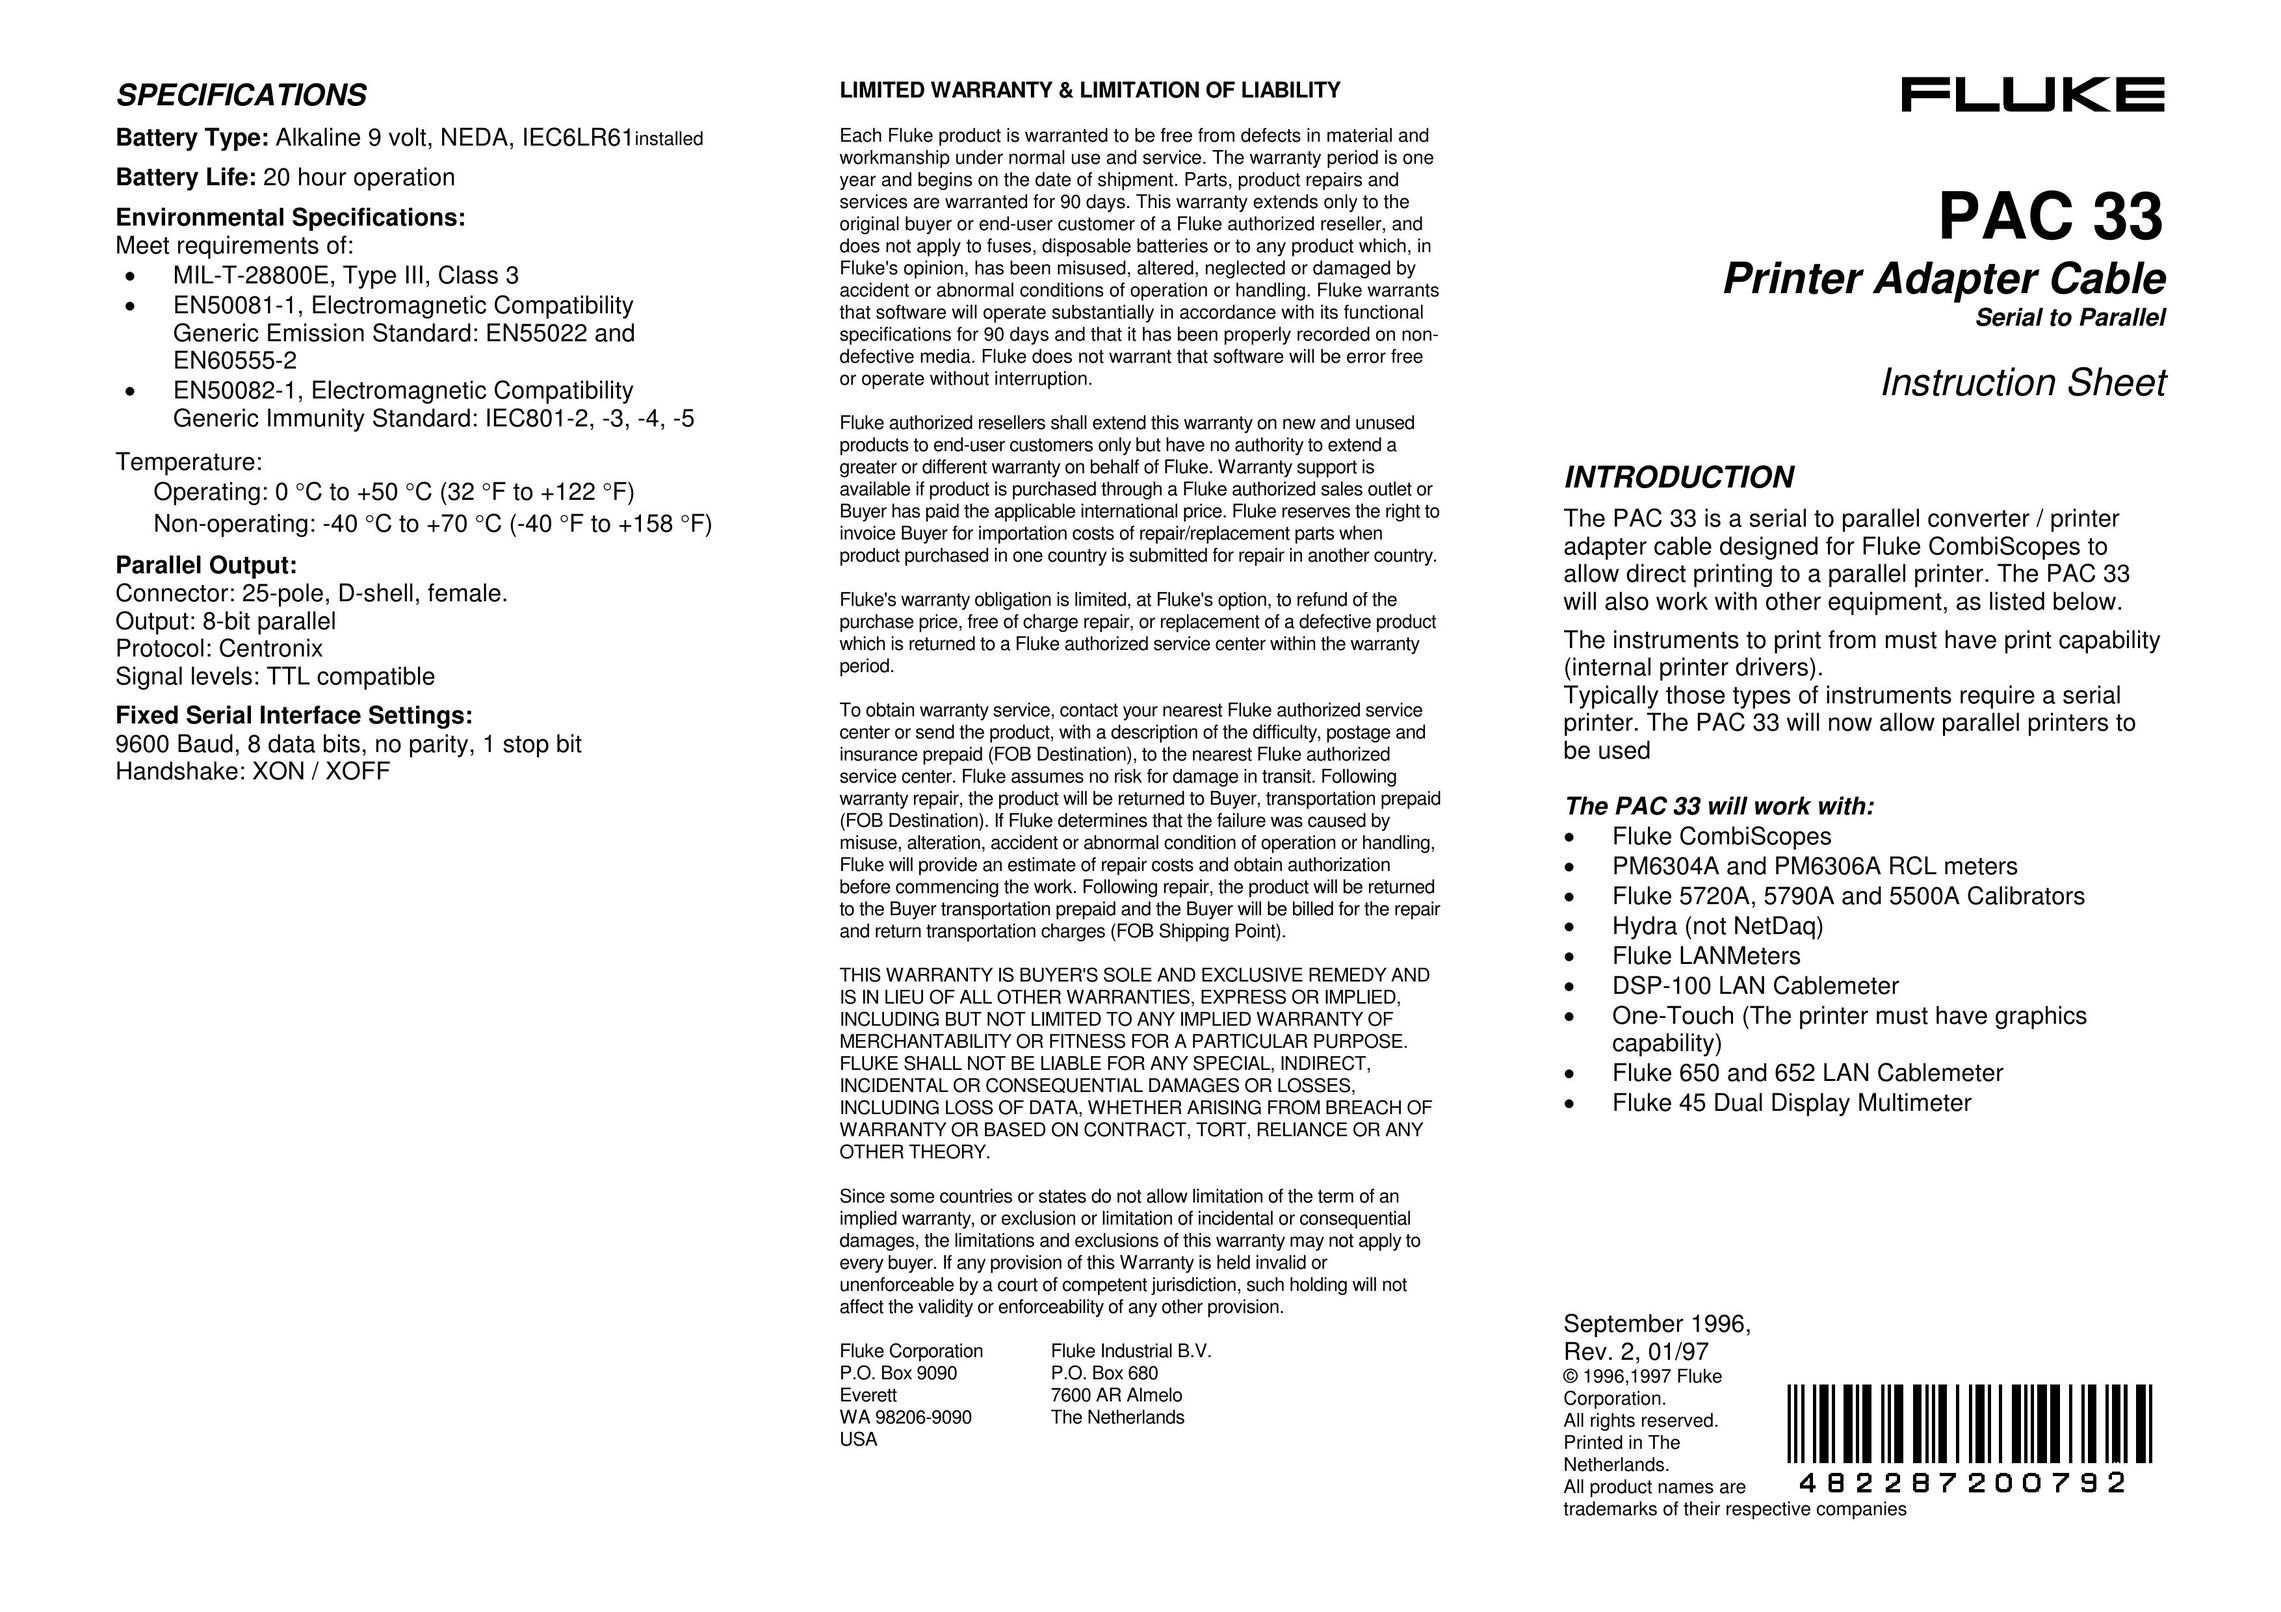 Fluke PAC 33 Printer Accessories User Manual